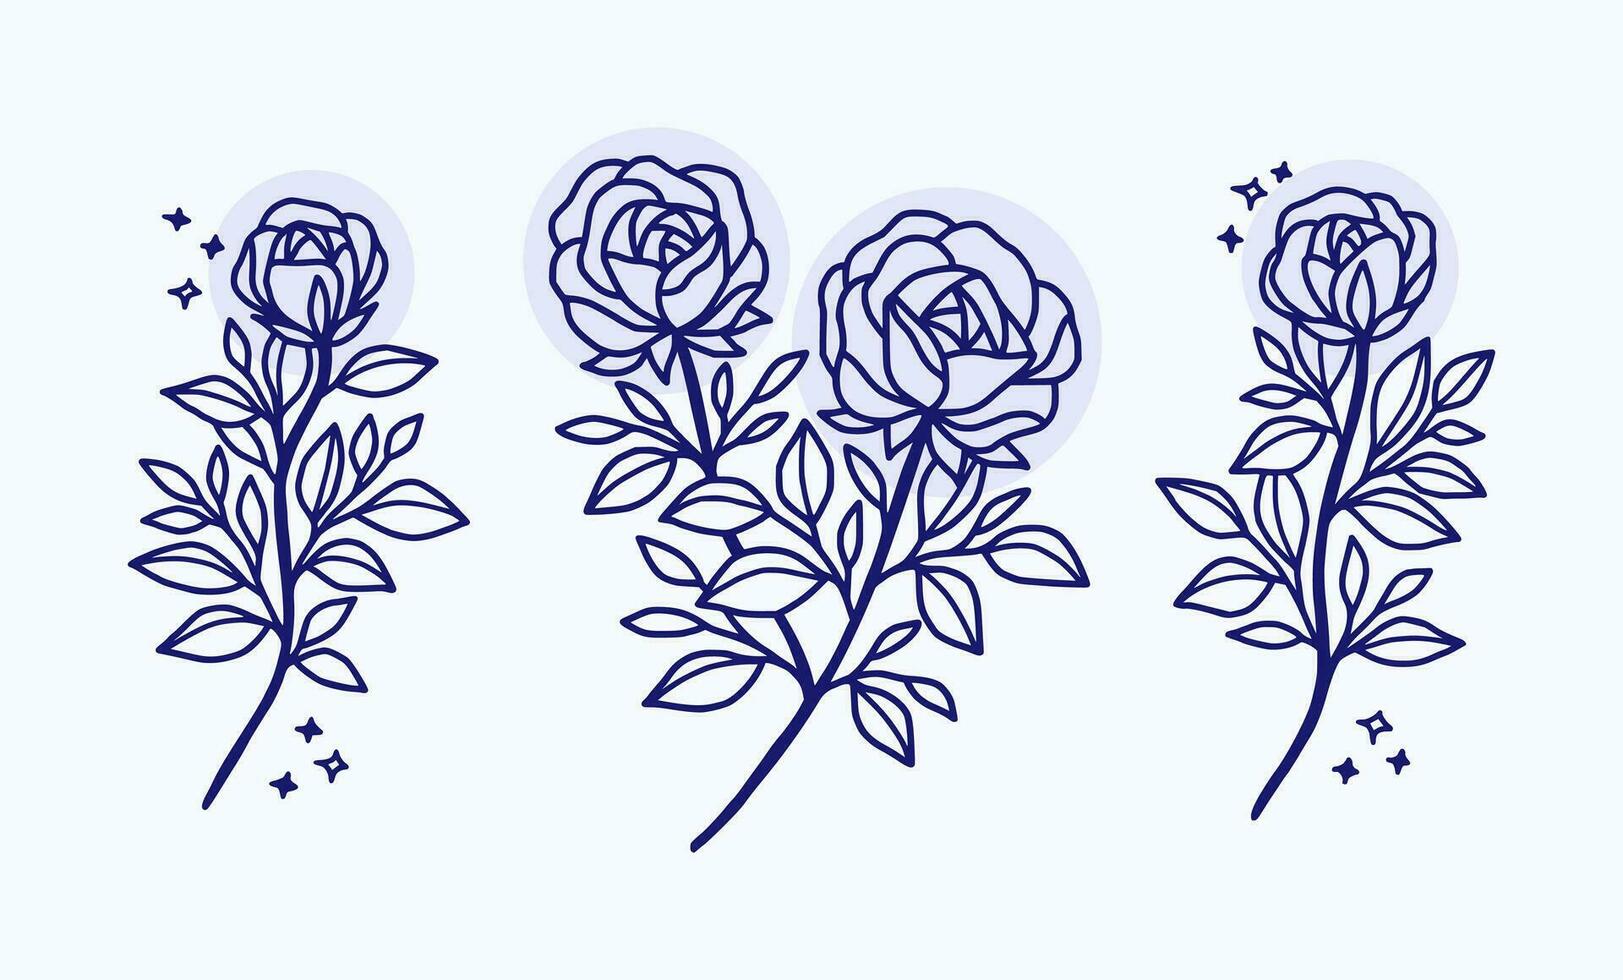 Clásico mano dibujado Rosa flor logo elemento colección vector